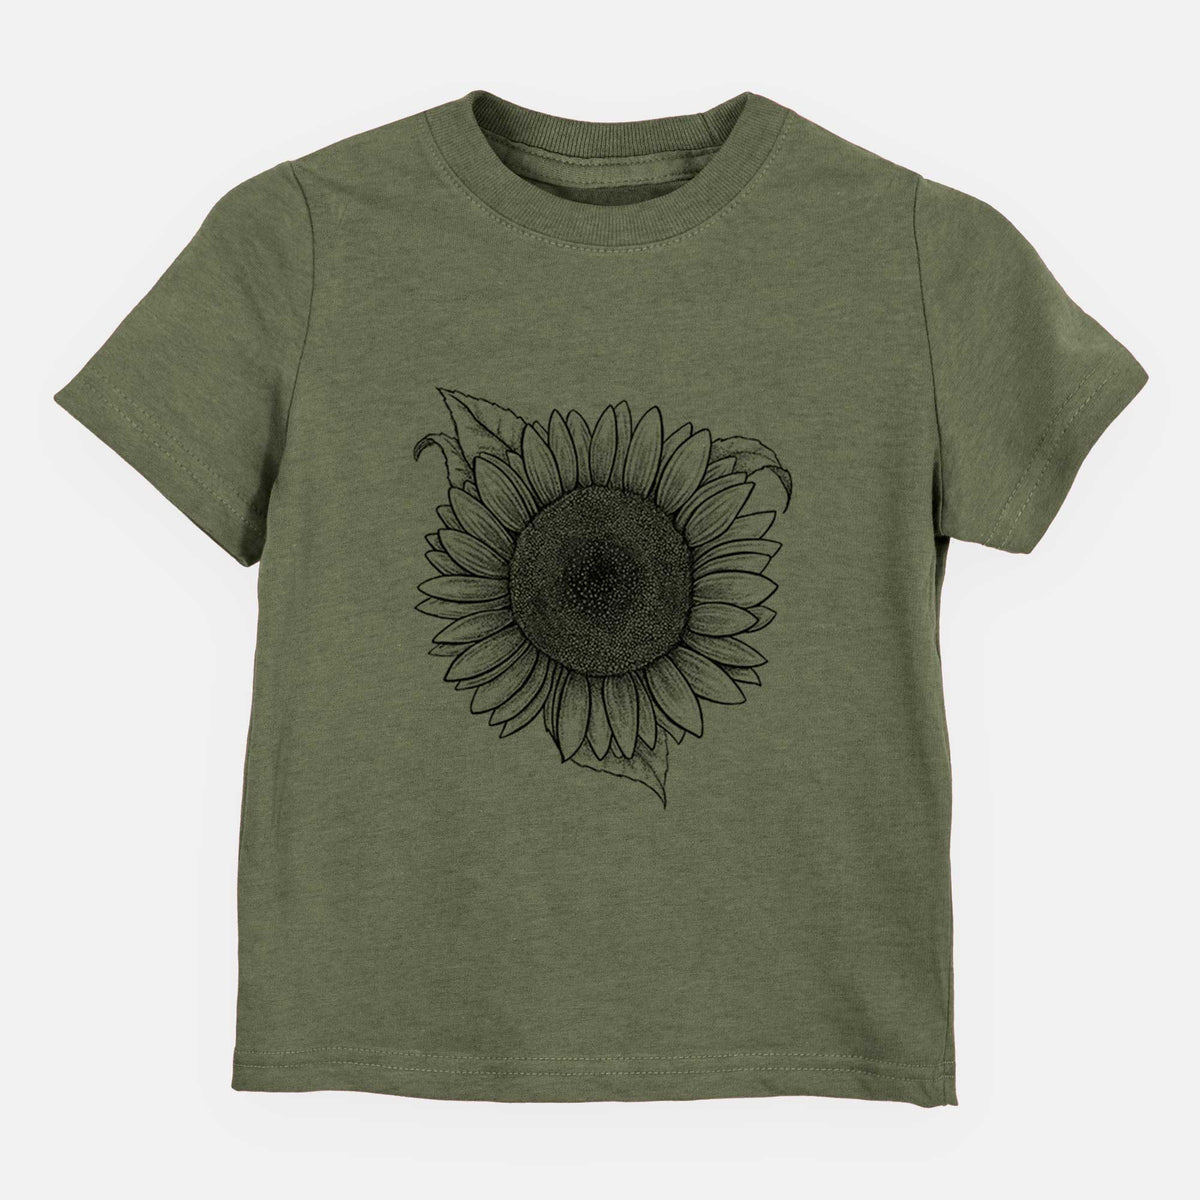 Lemon Queen Sunflower - Helianthus Annuus - Kids Shirt